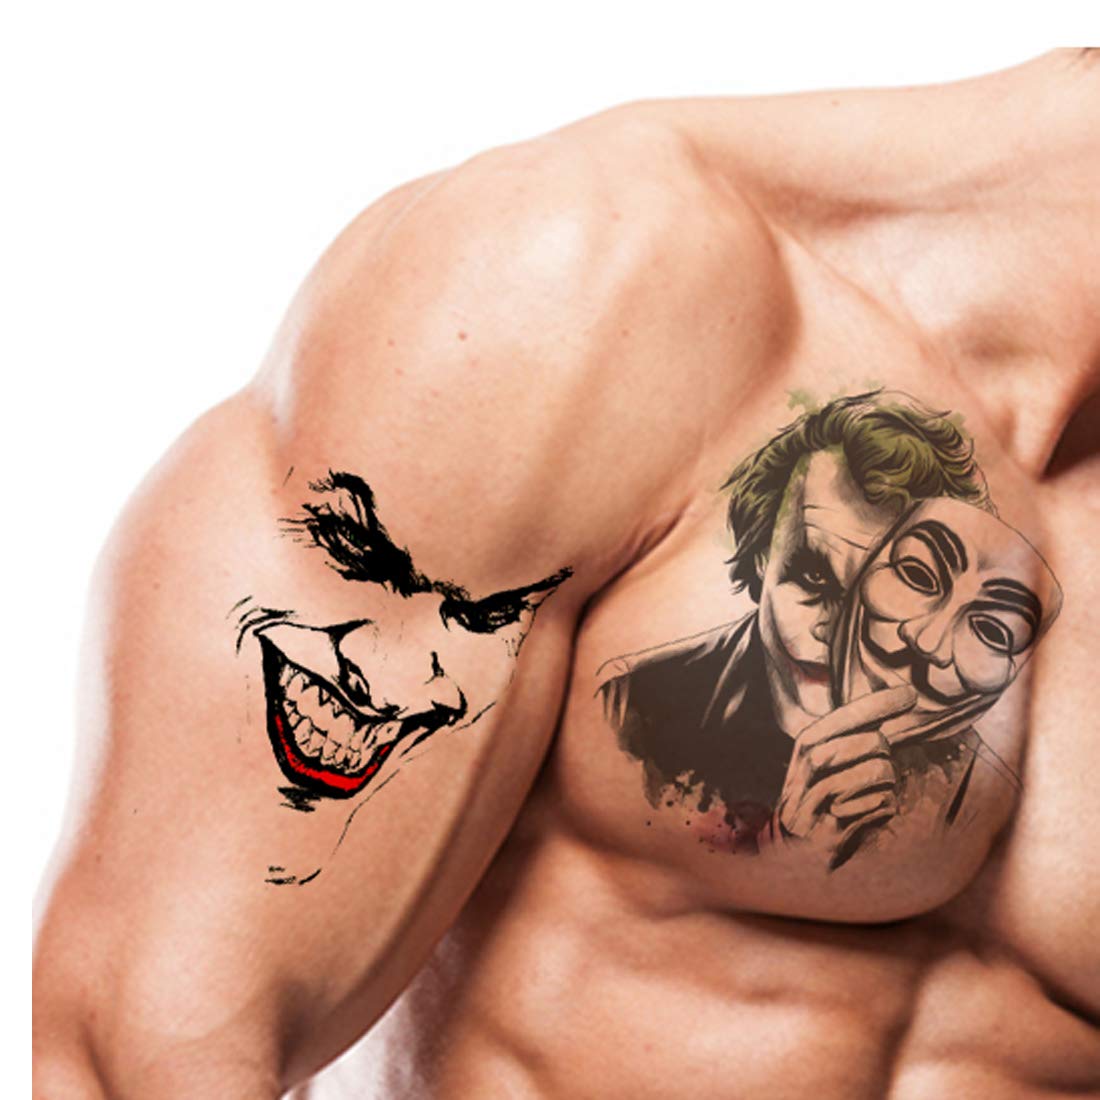 Joker's Tattoos in 'Suicide Squad'